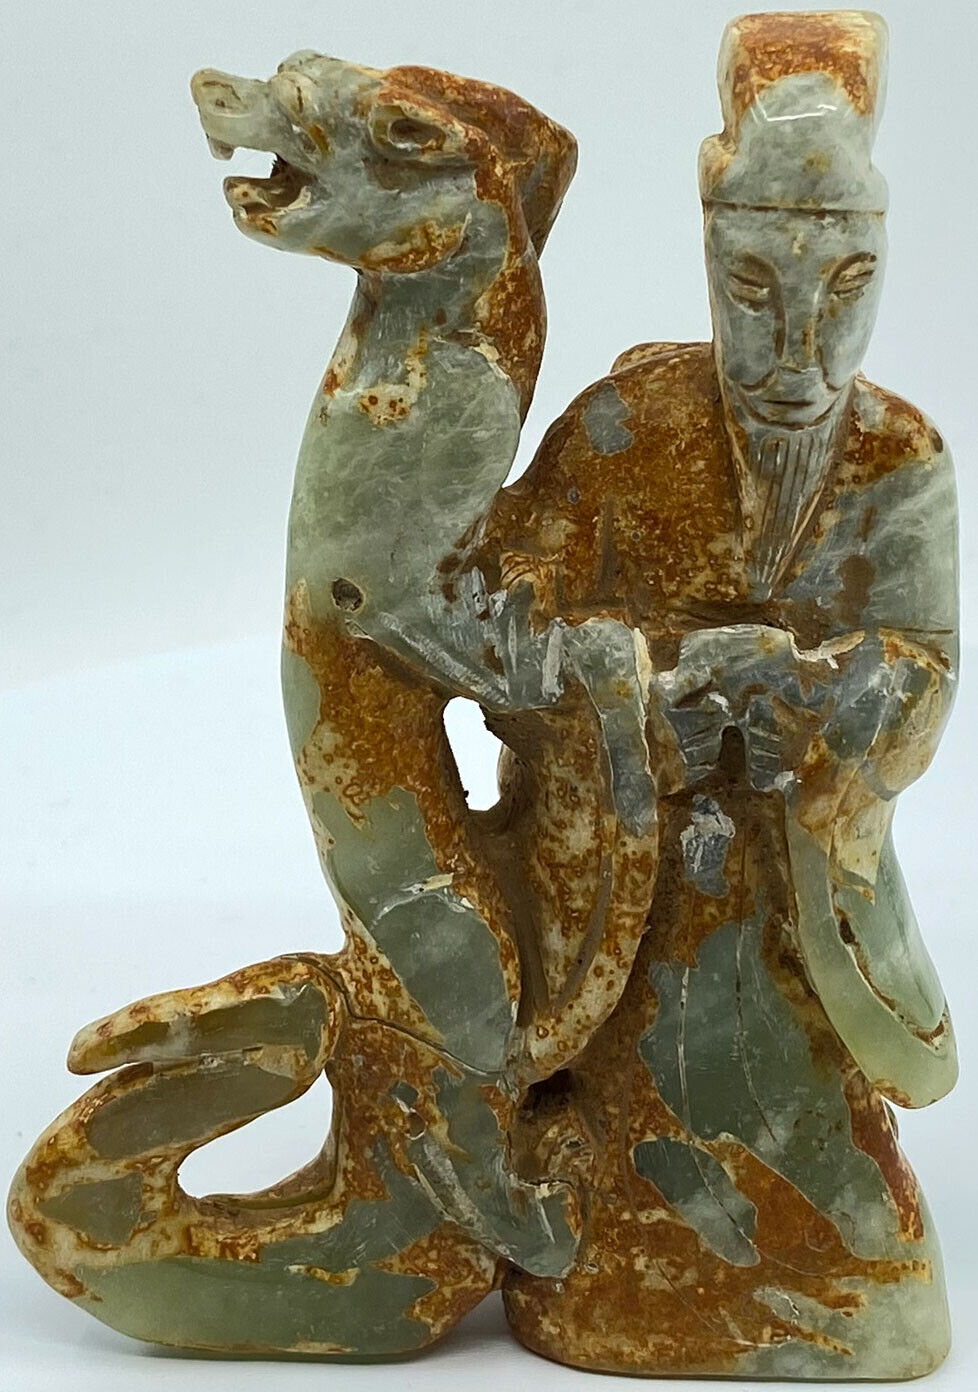 Ancient China Chinese JADE Man with Dragon Figurine Artifact 206BC-220AD i119448